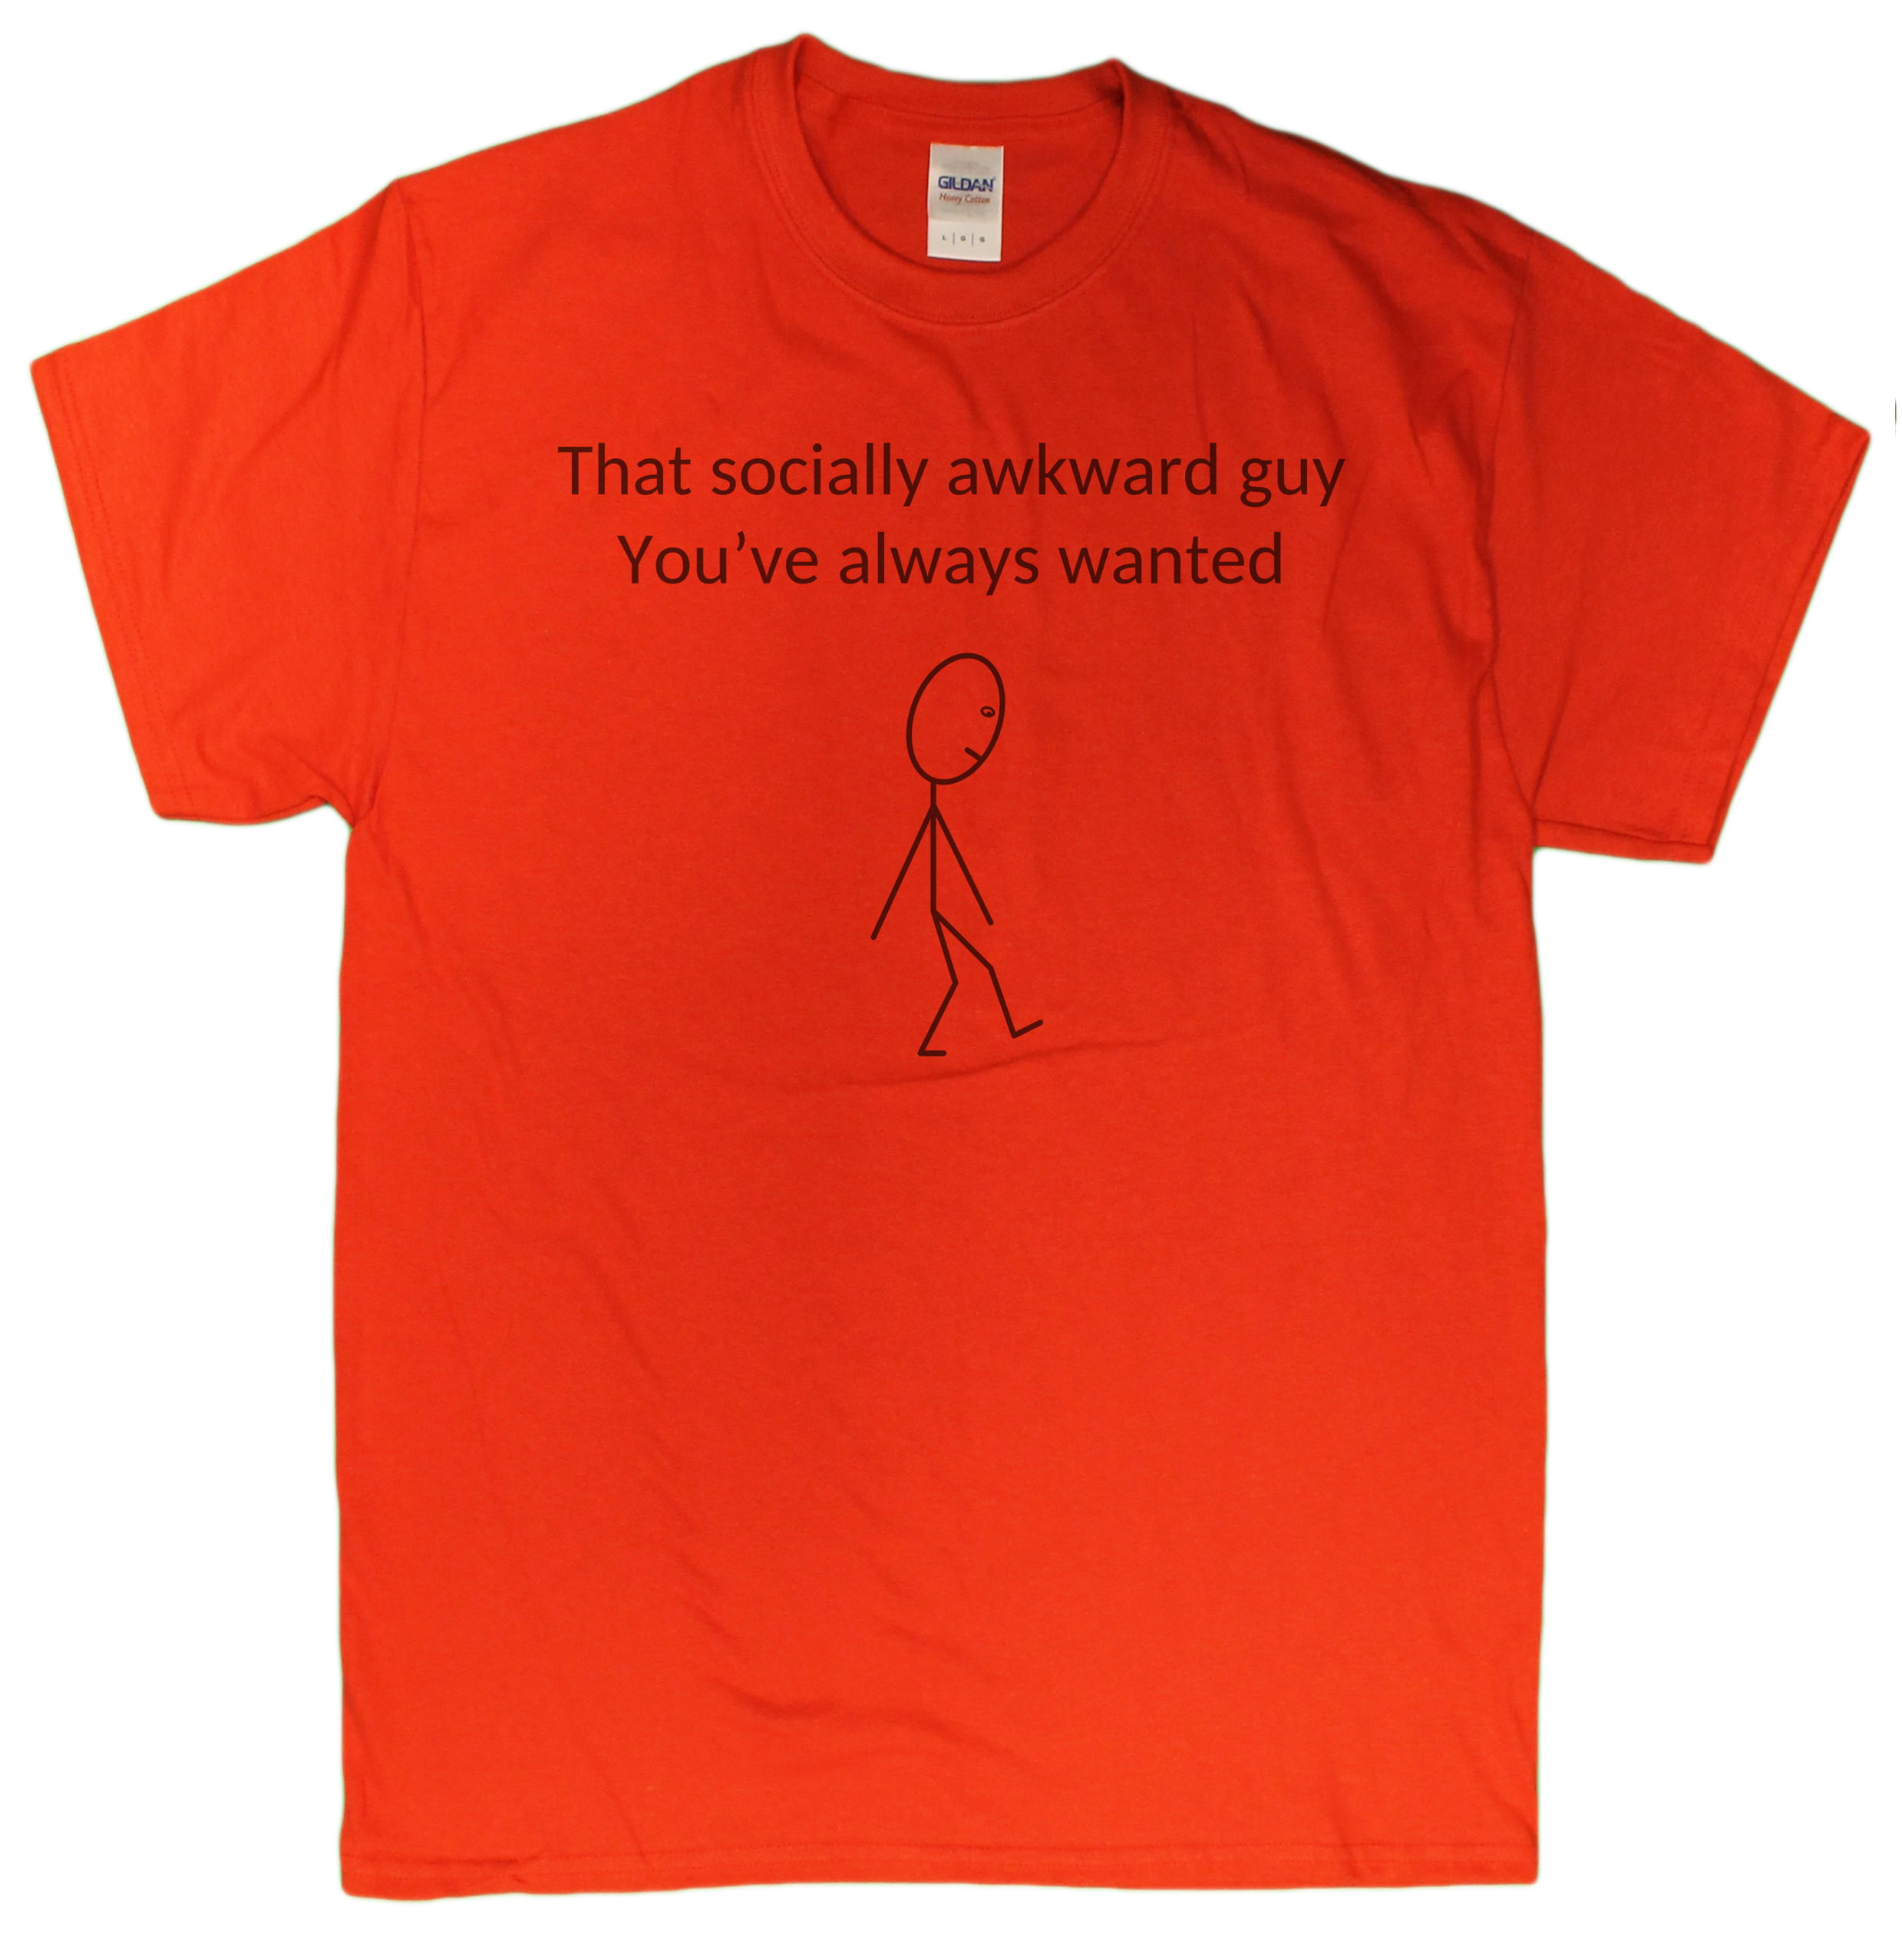 Men's Socially Awkward Funny Nerd T-shirt (Red, Small) 